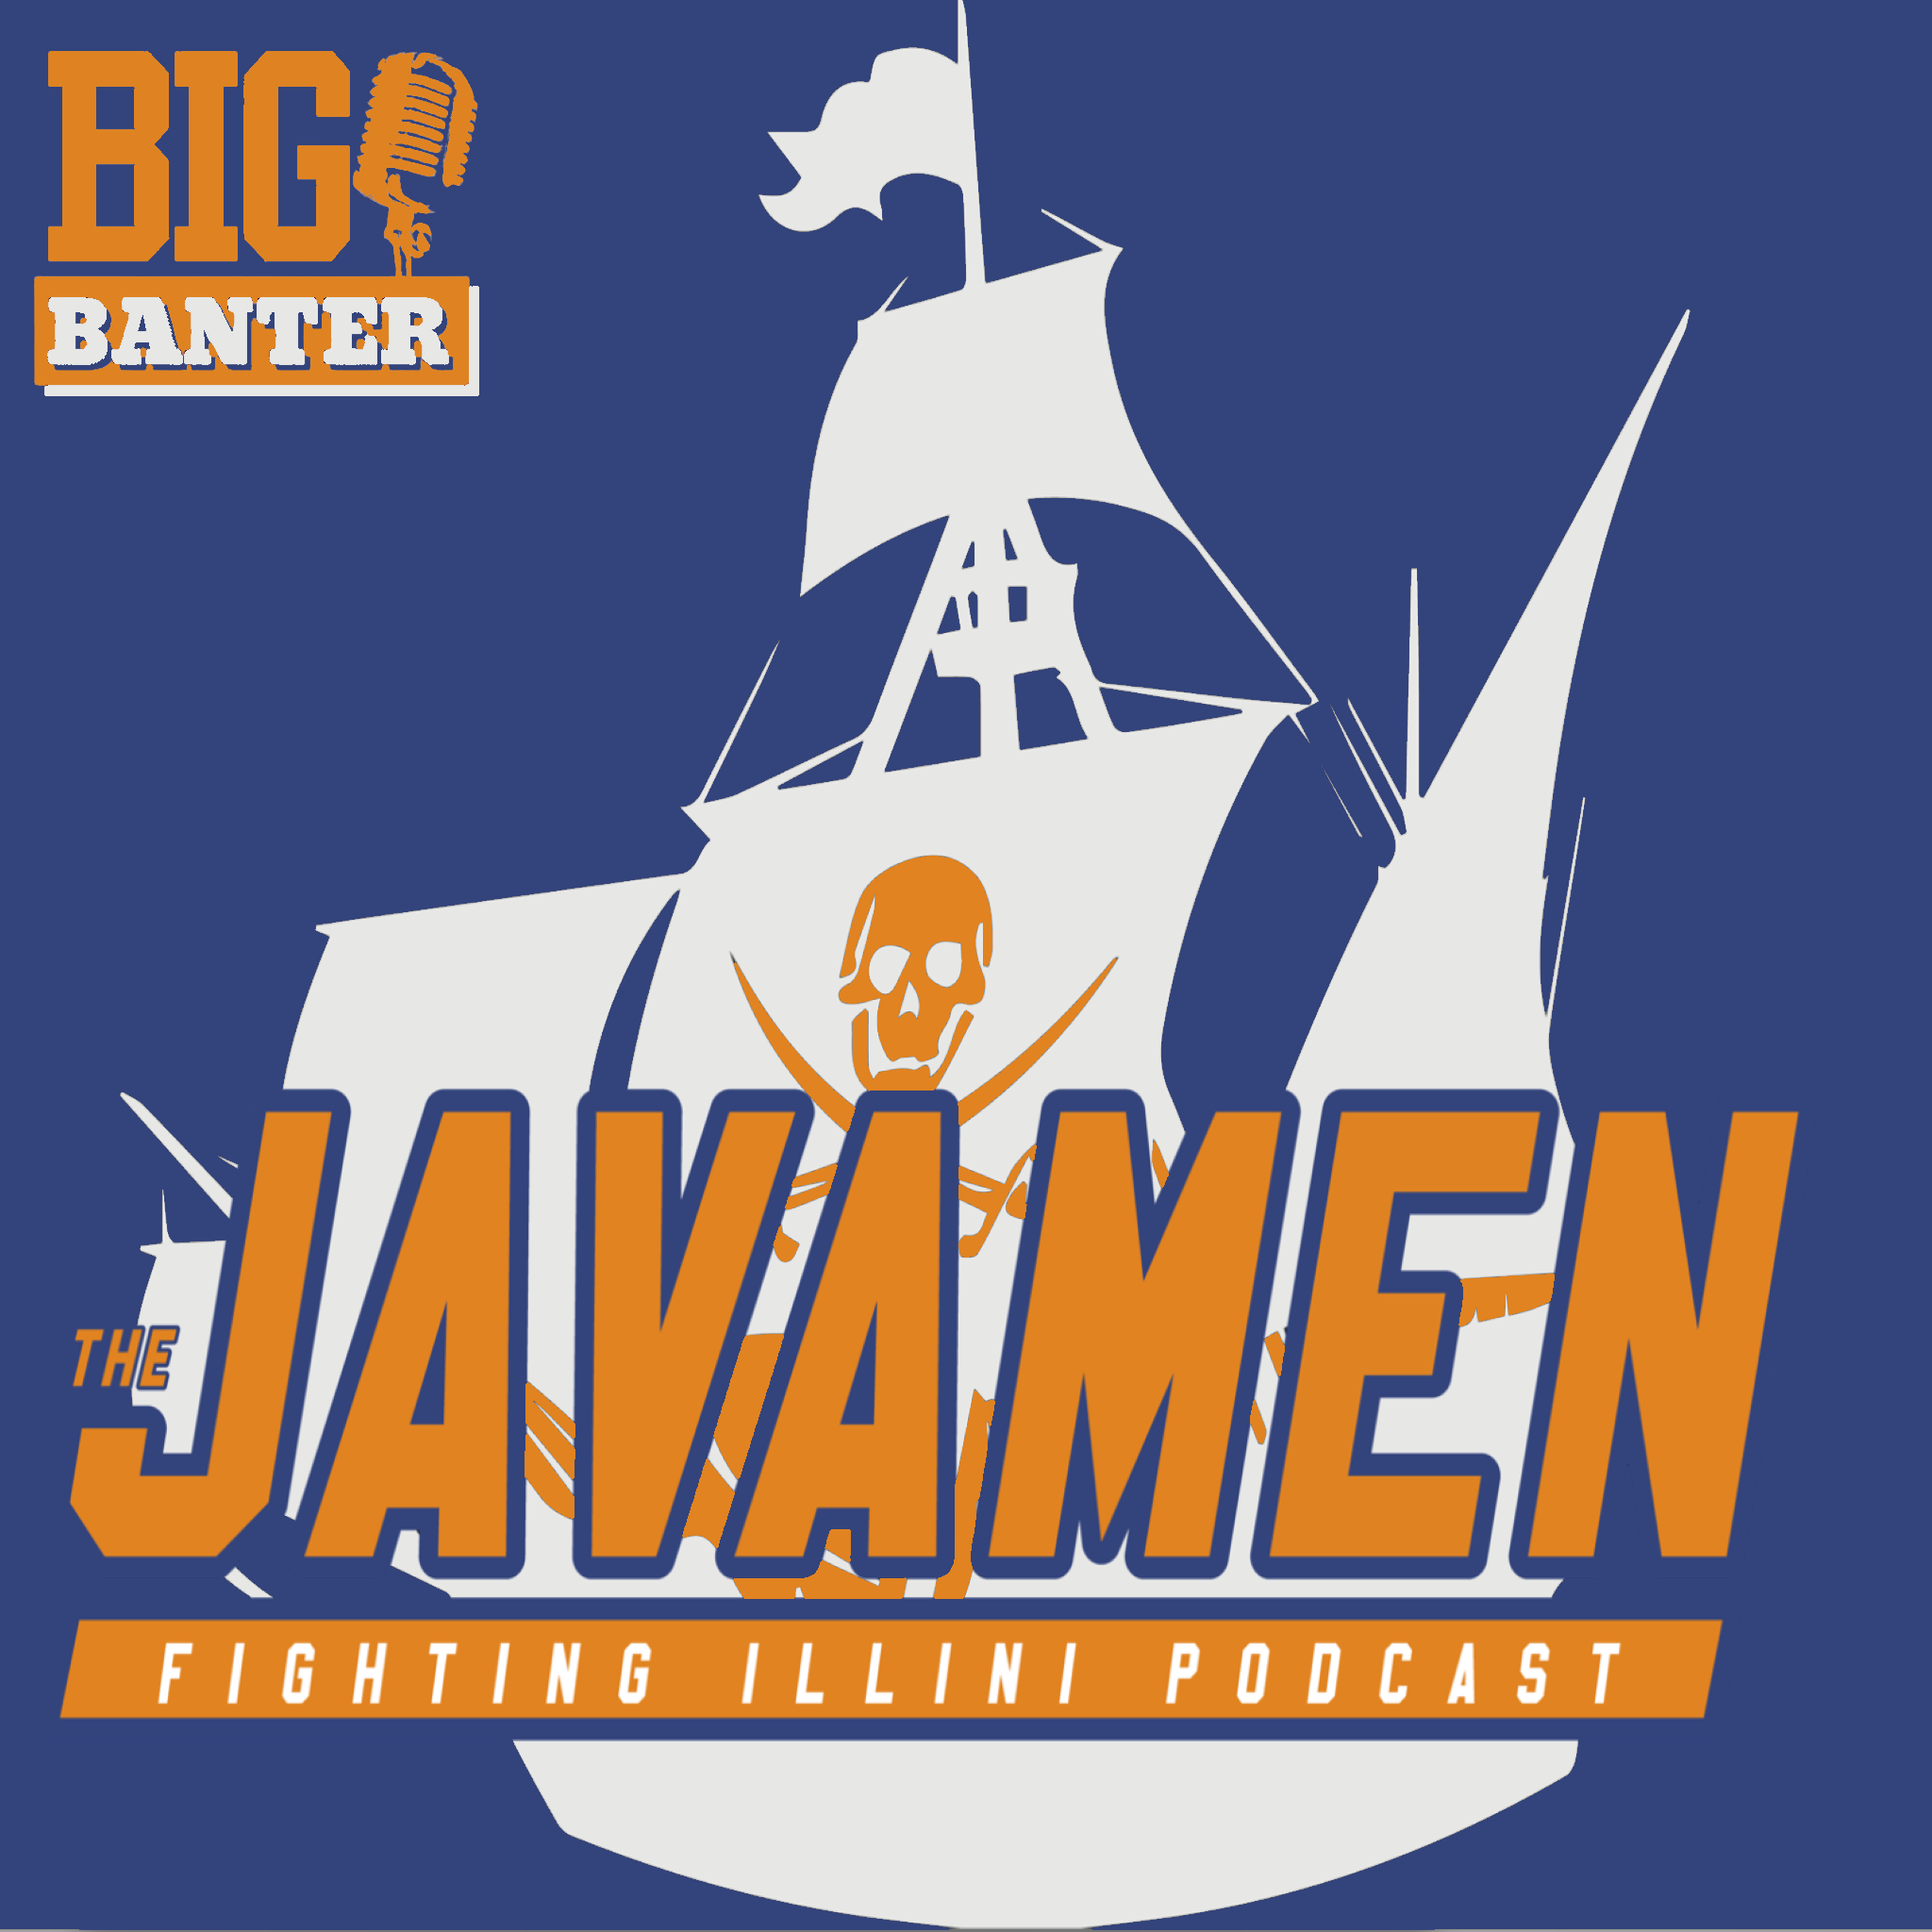 Artwork for The Javamen Fighting Illini Podcast